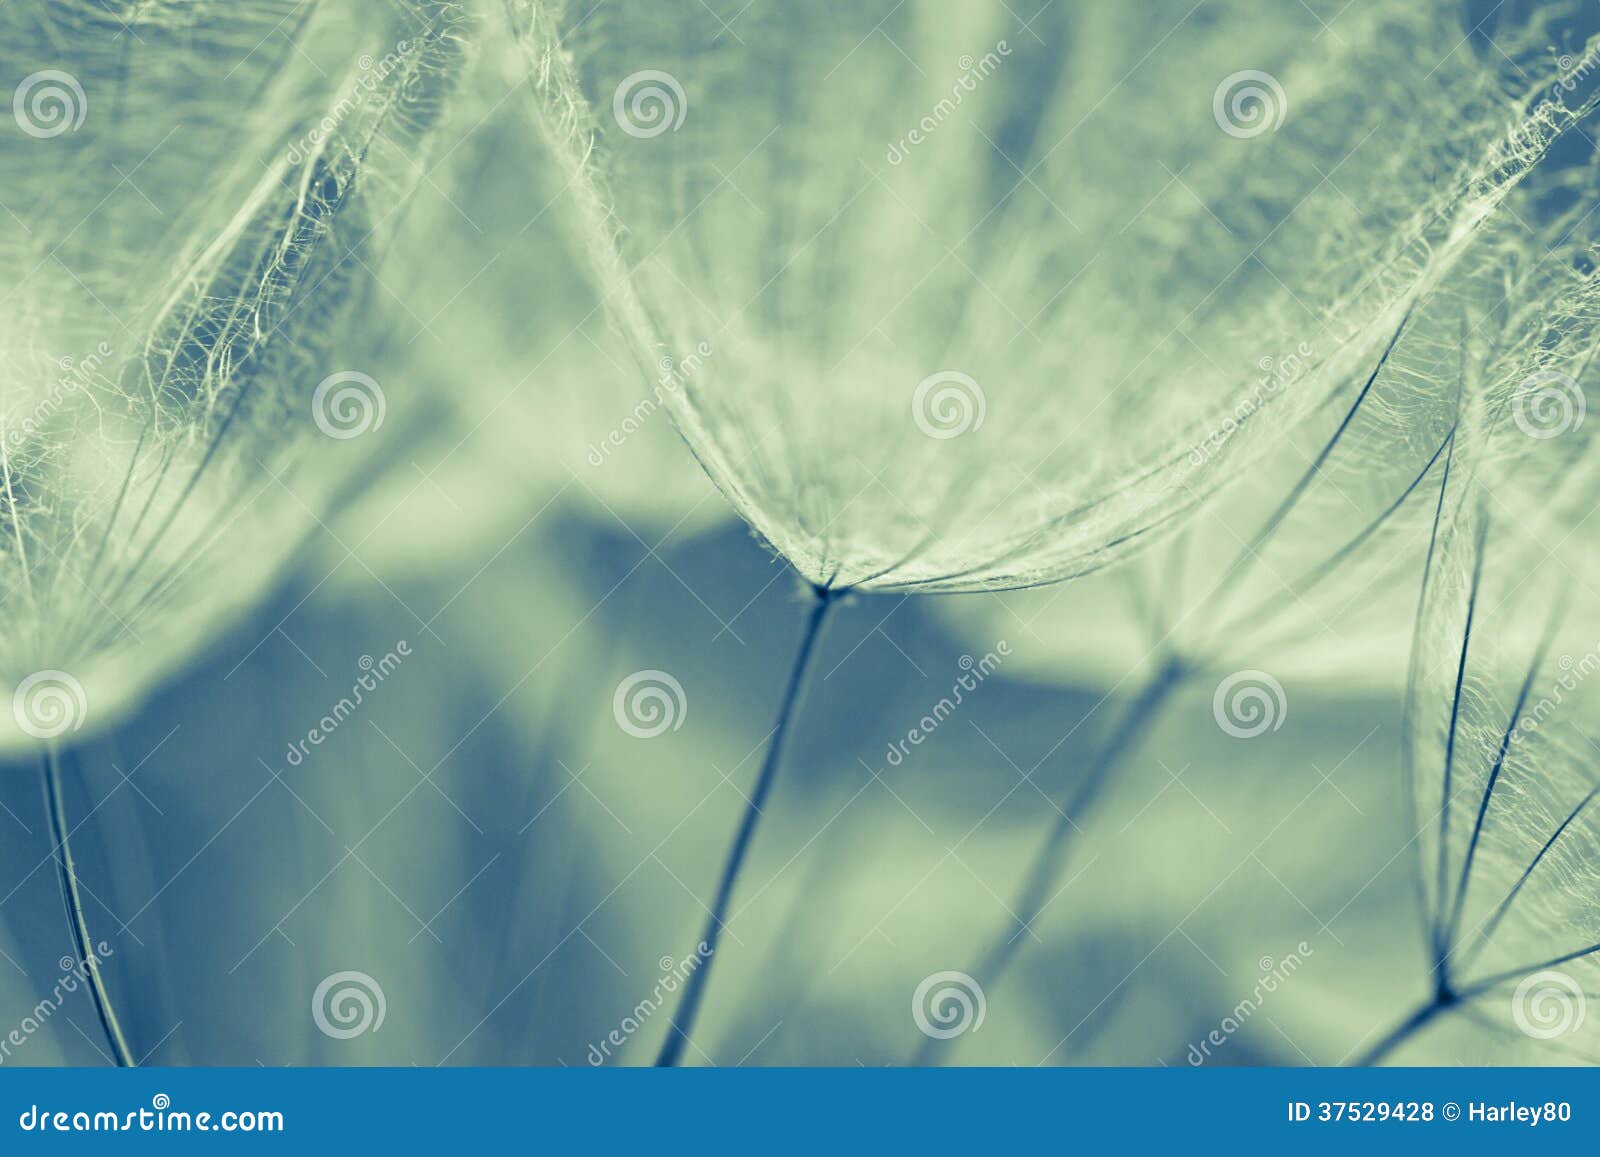 abstract dandelion flower background, extreme closeup. big dandelion on natural background.